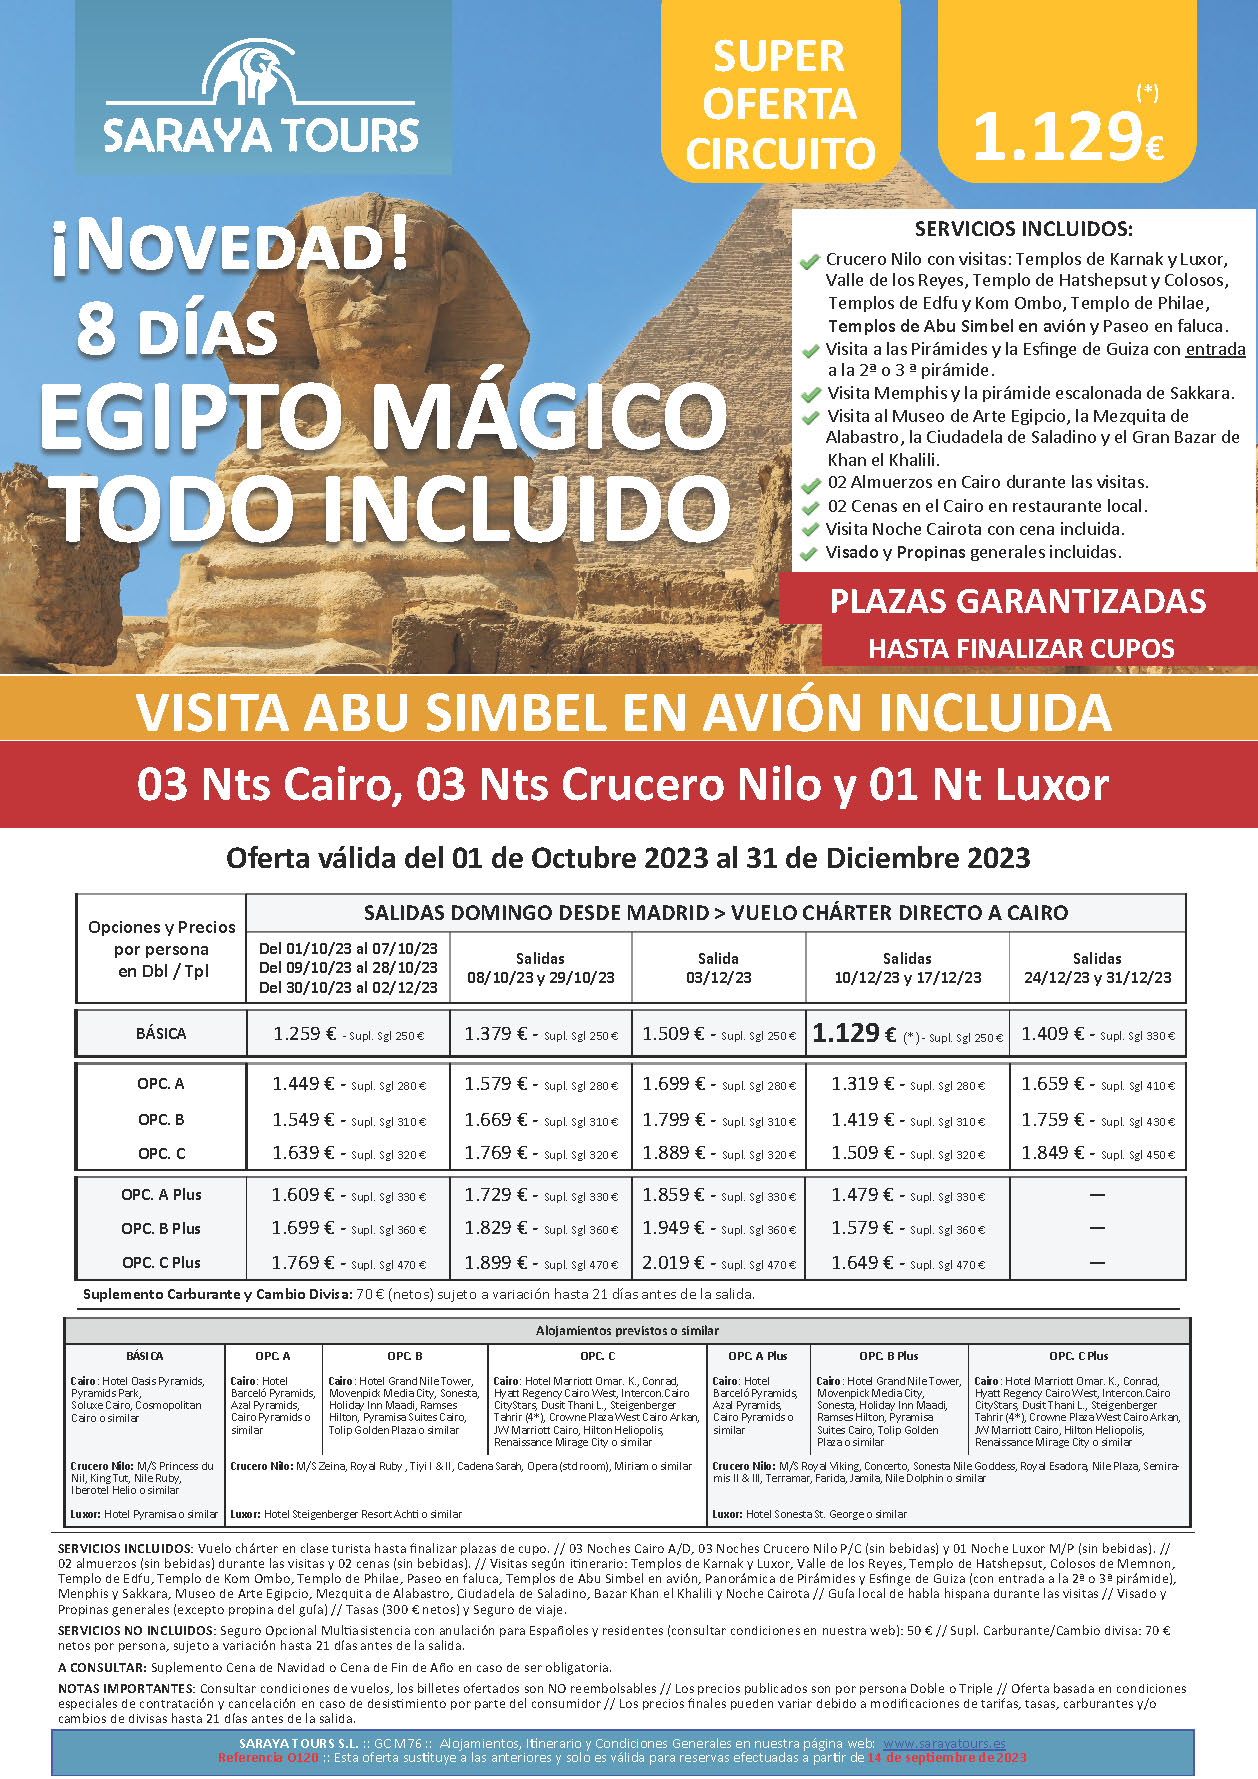 Oferta Saraya Tours 2023 Egipto Magico Todo Incluido Abu Simbel en avion Charter 8 dias salidas desde Madrid